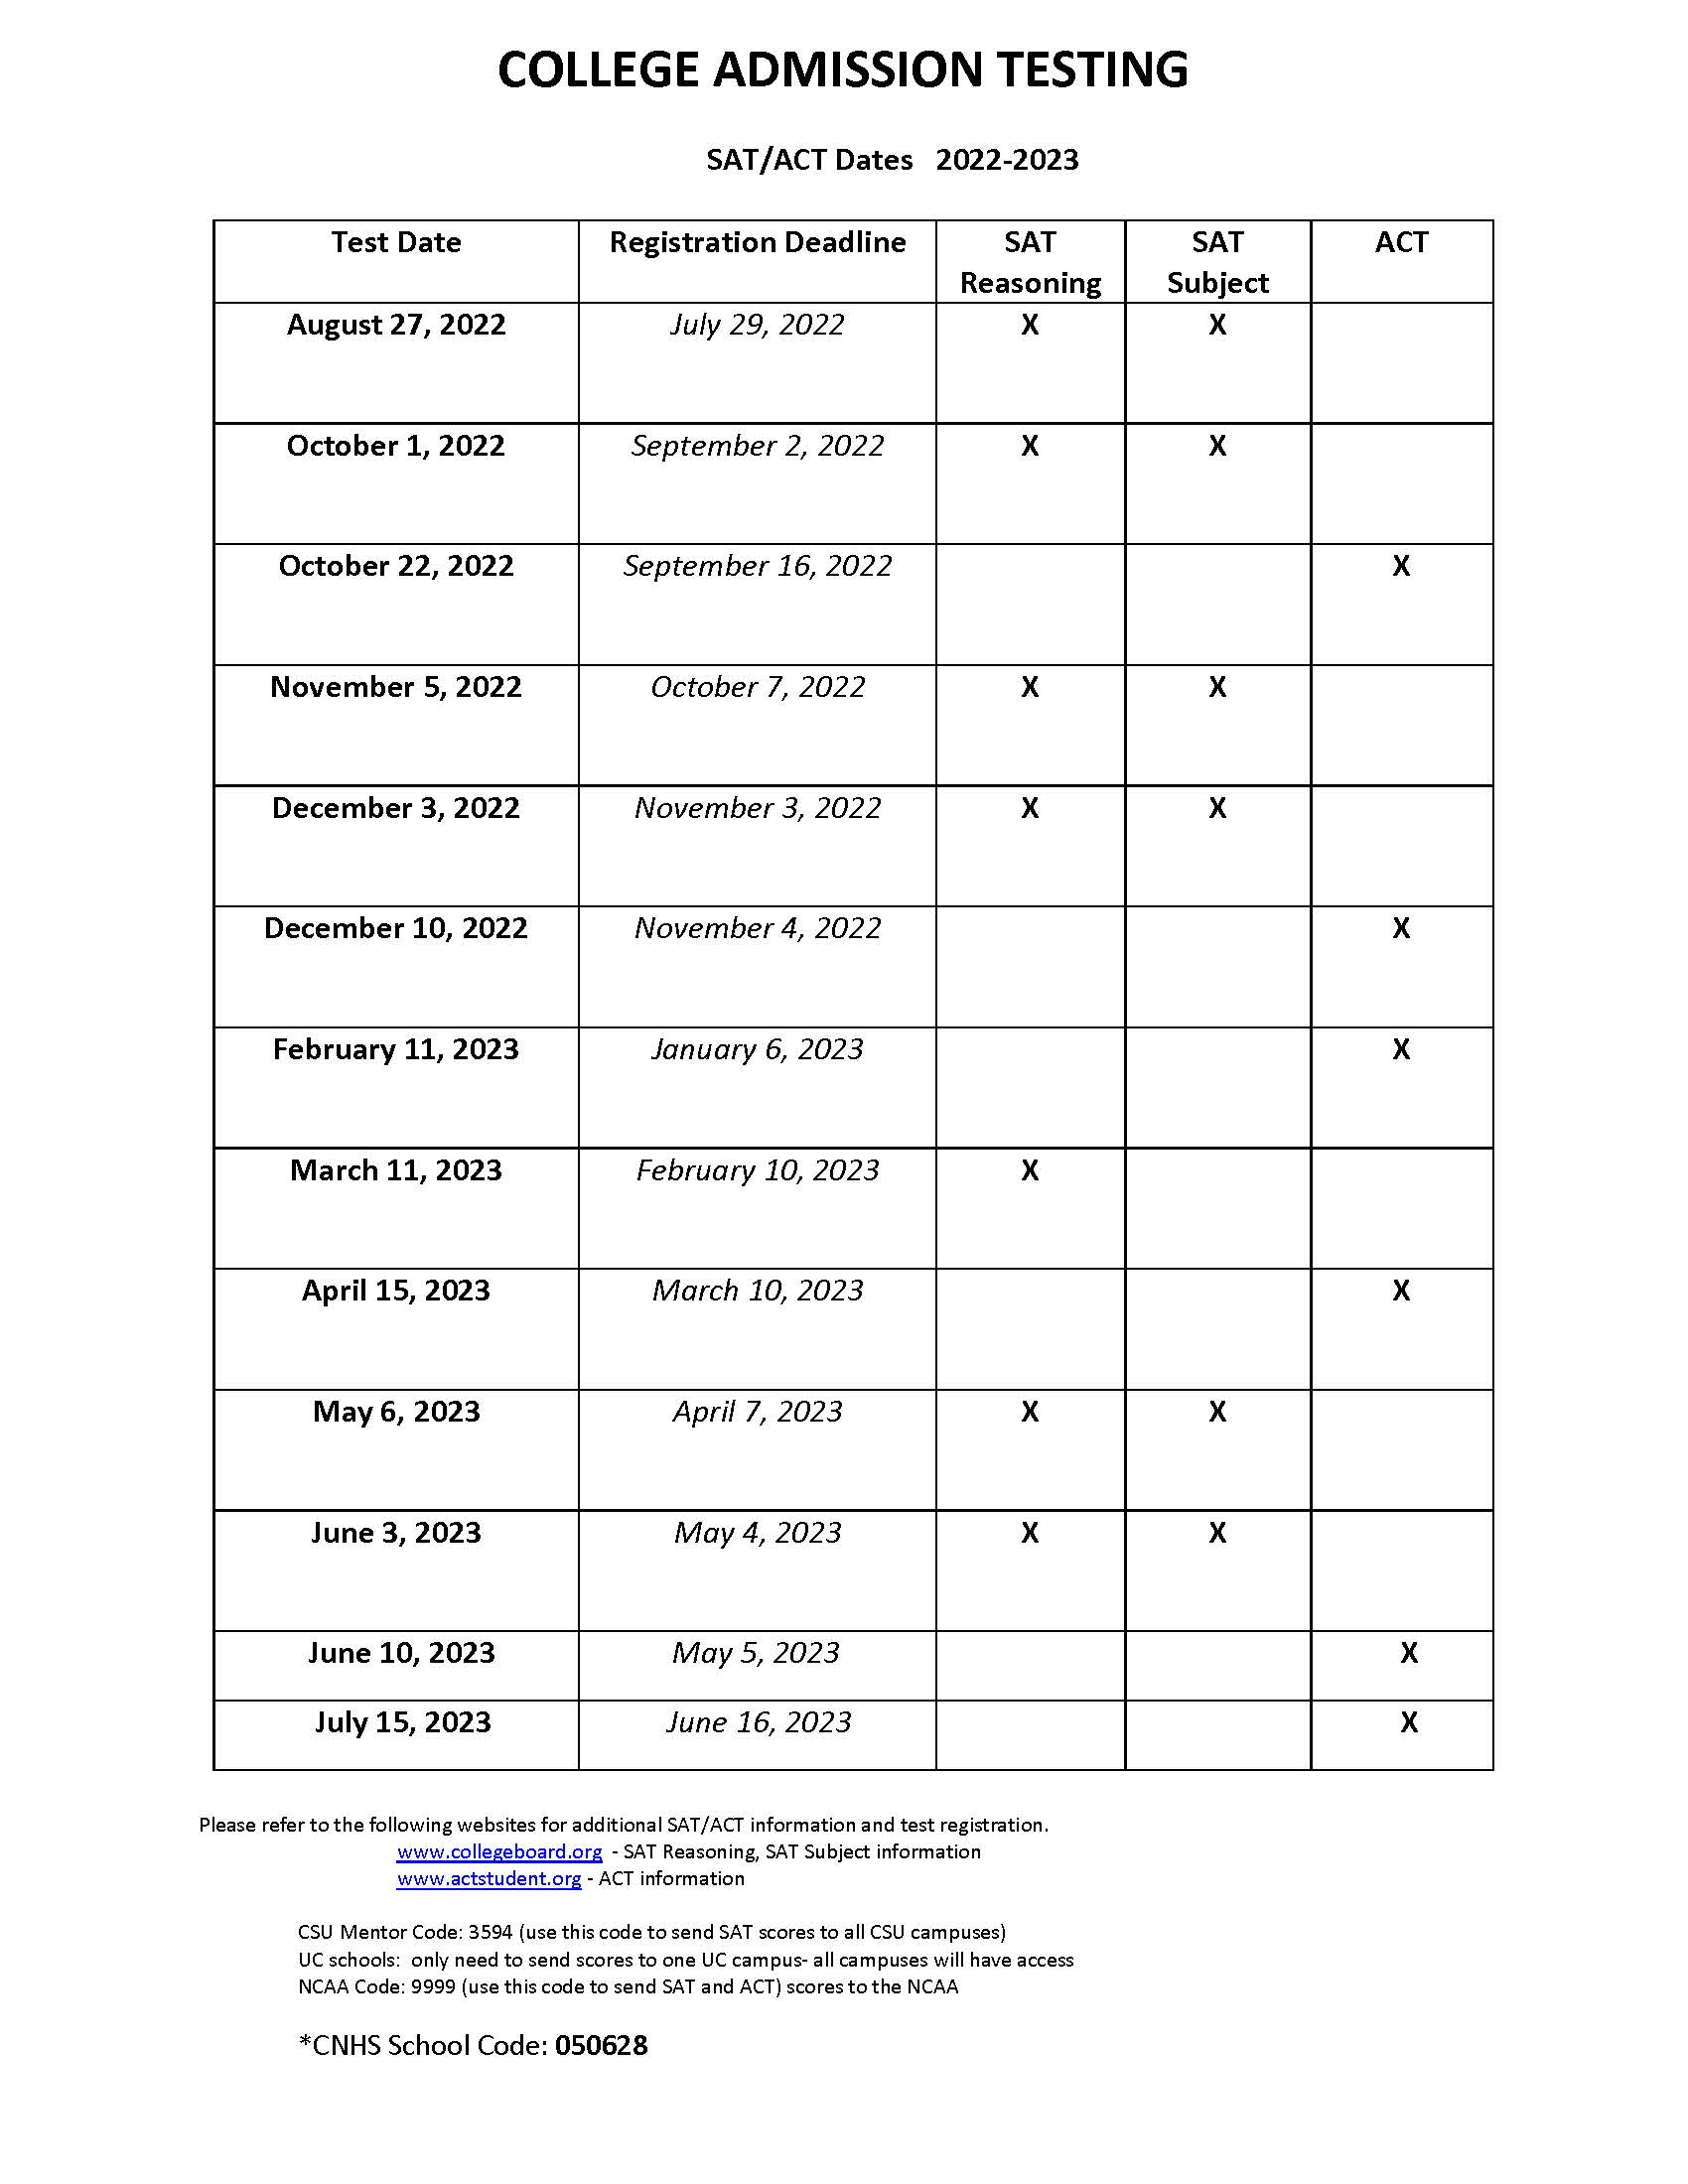 ACT/SAT Testing Dates